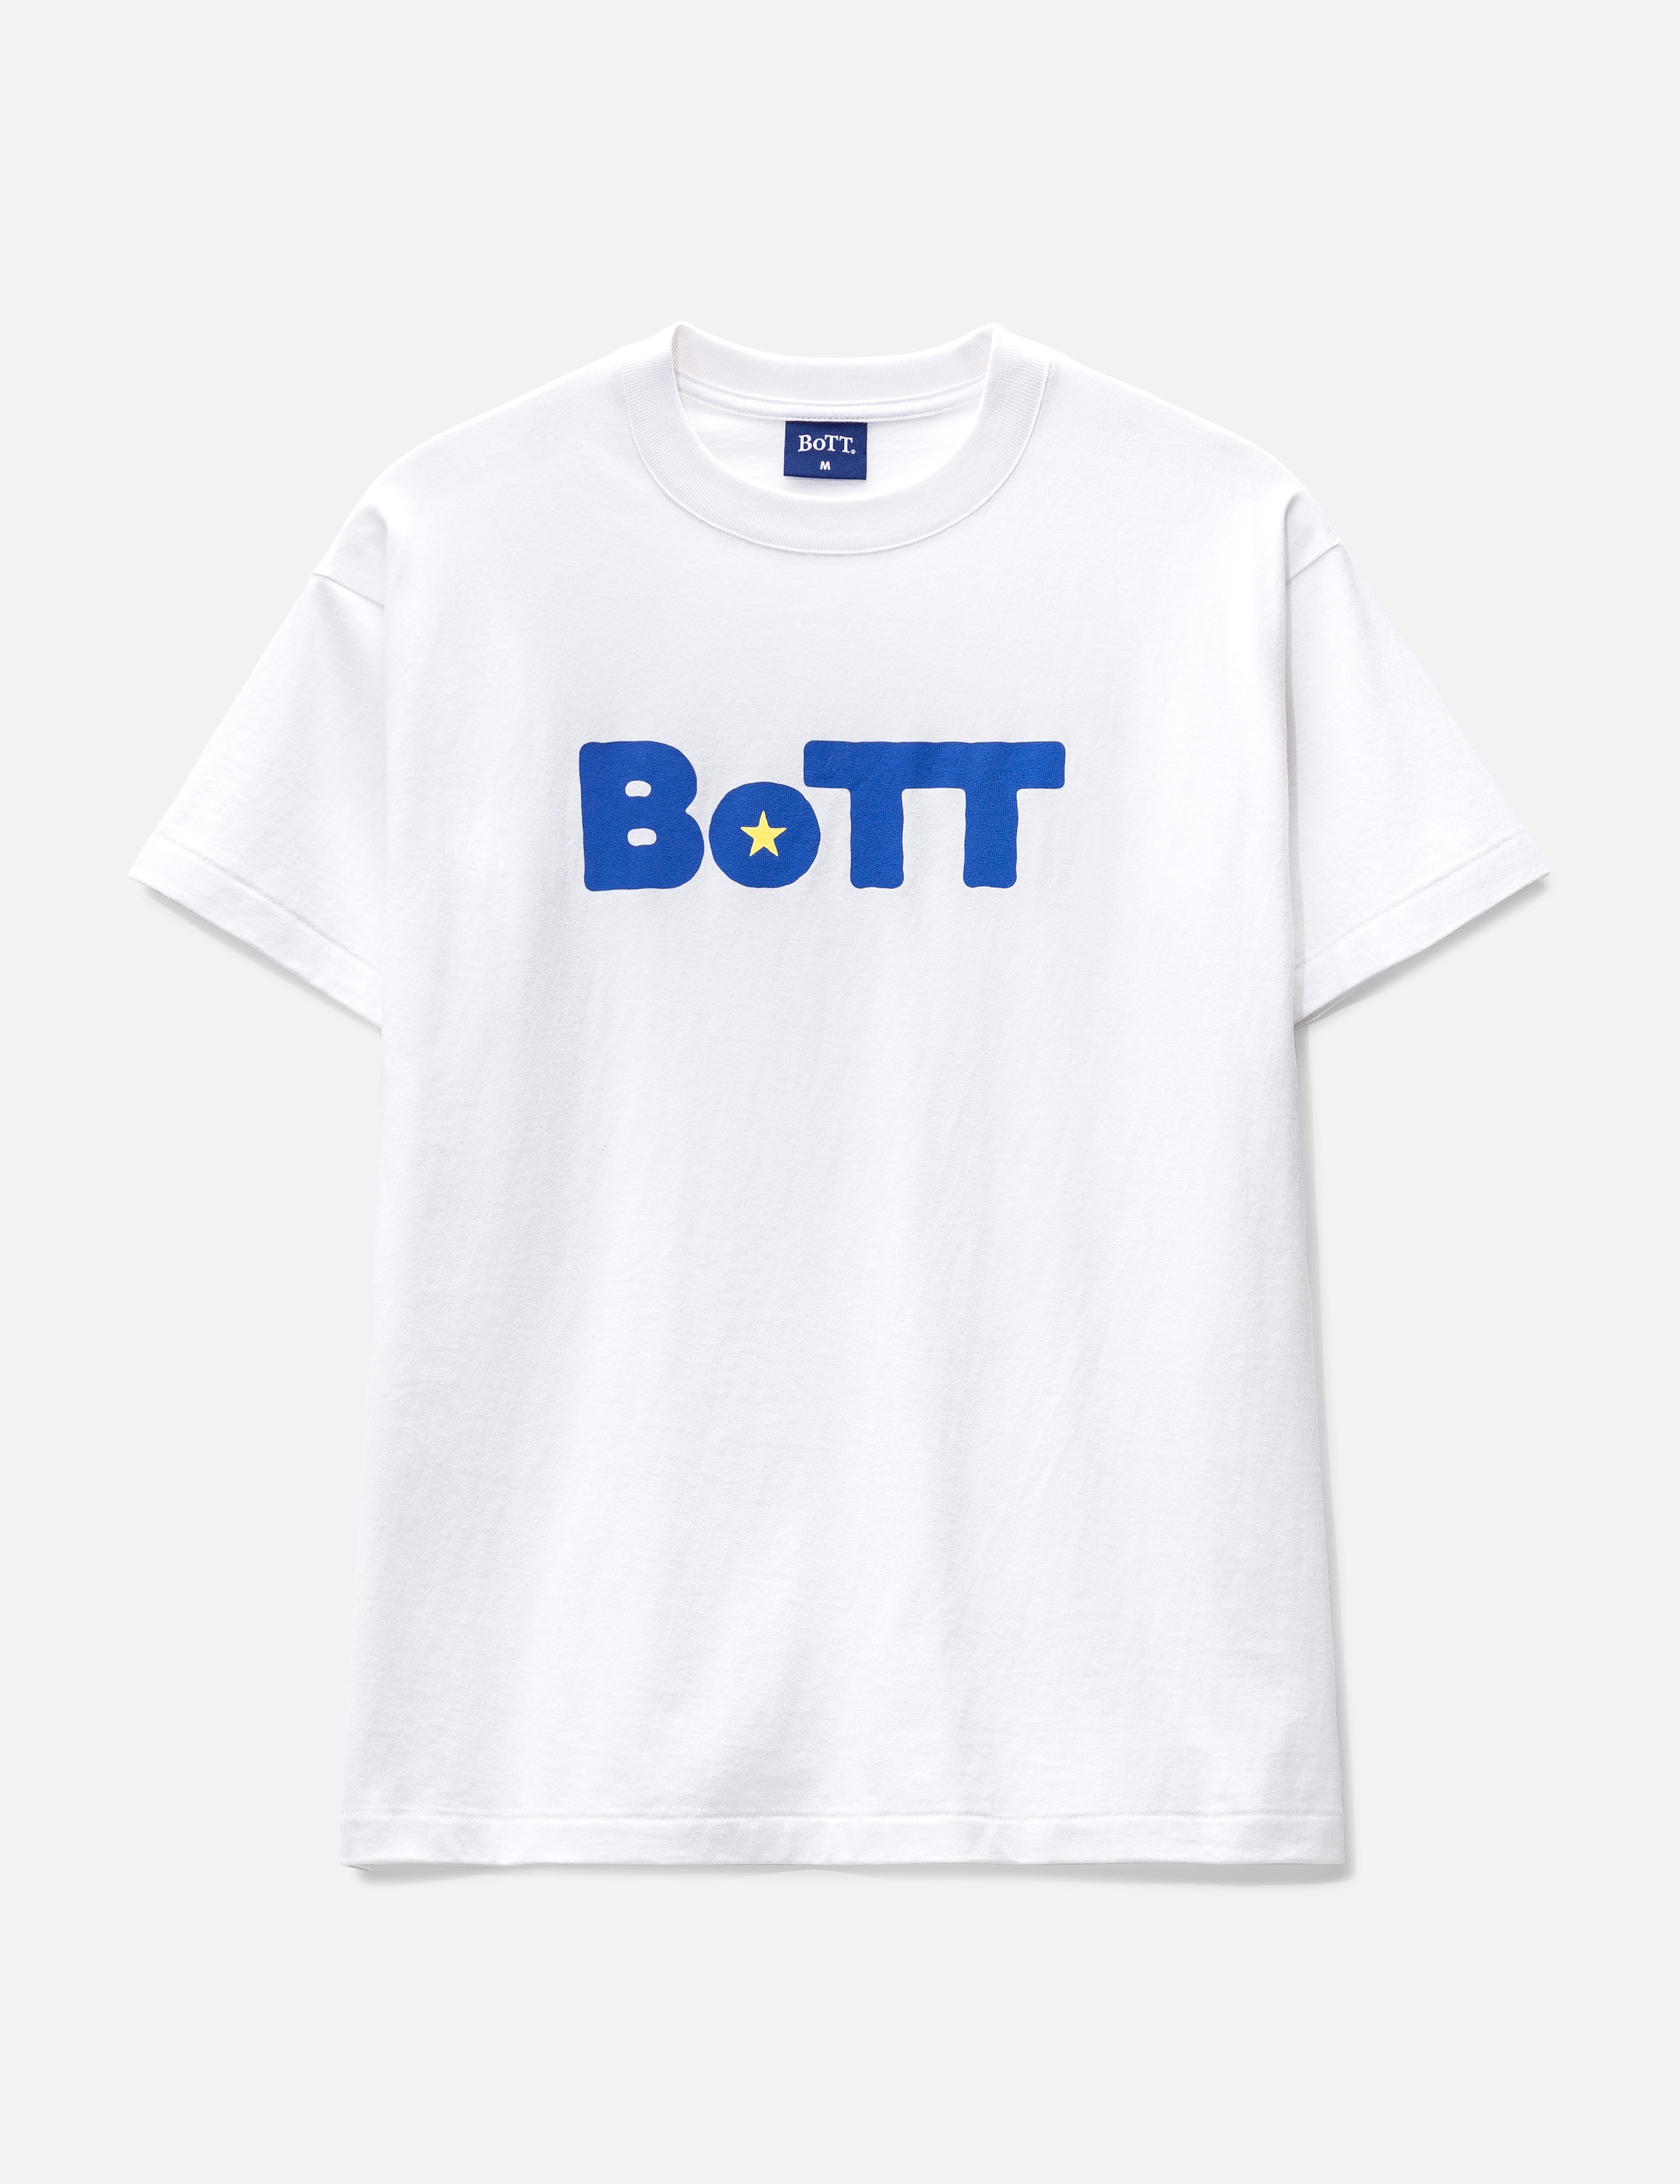 BoTT - スター ロゴ Tシャツ | HBX - ハイプビースト(Hypebeast)が厳選 ...